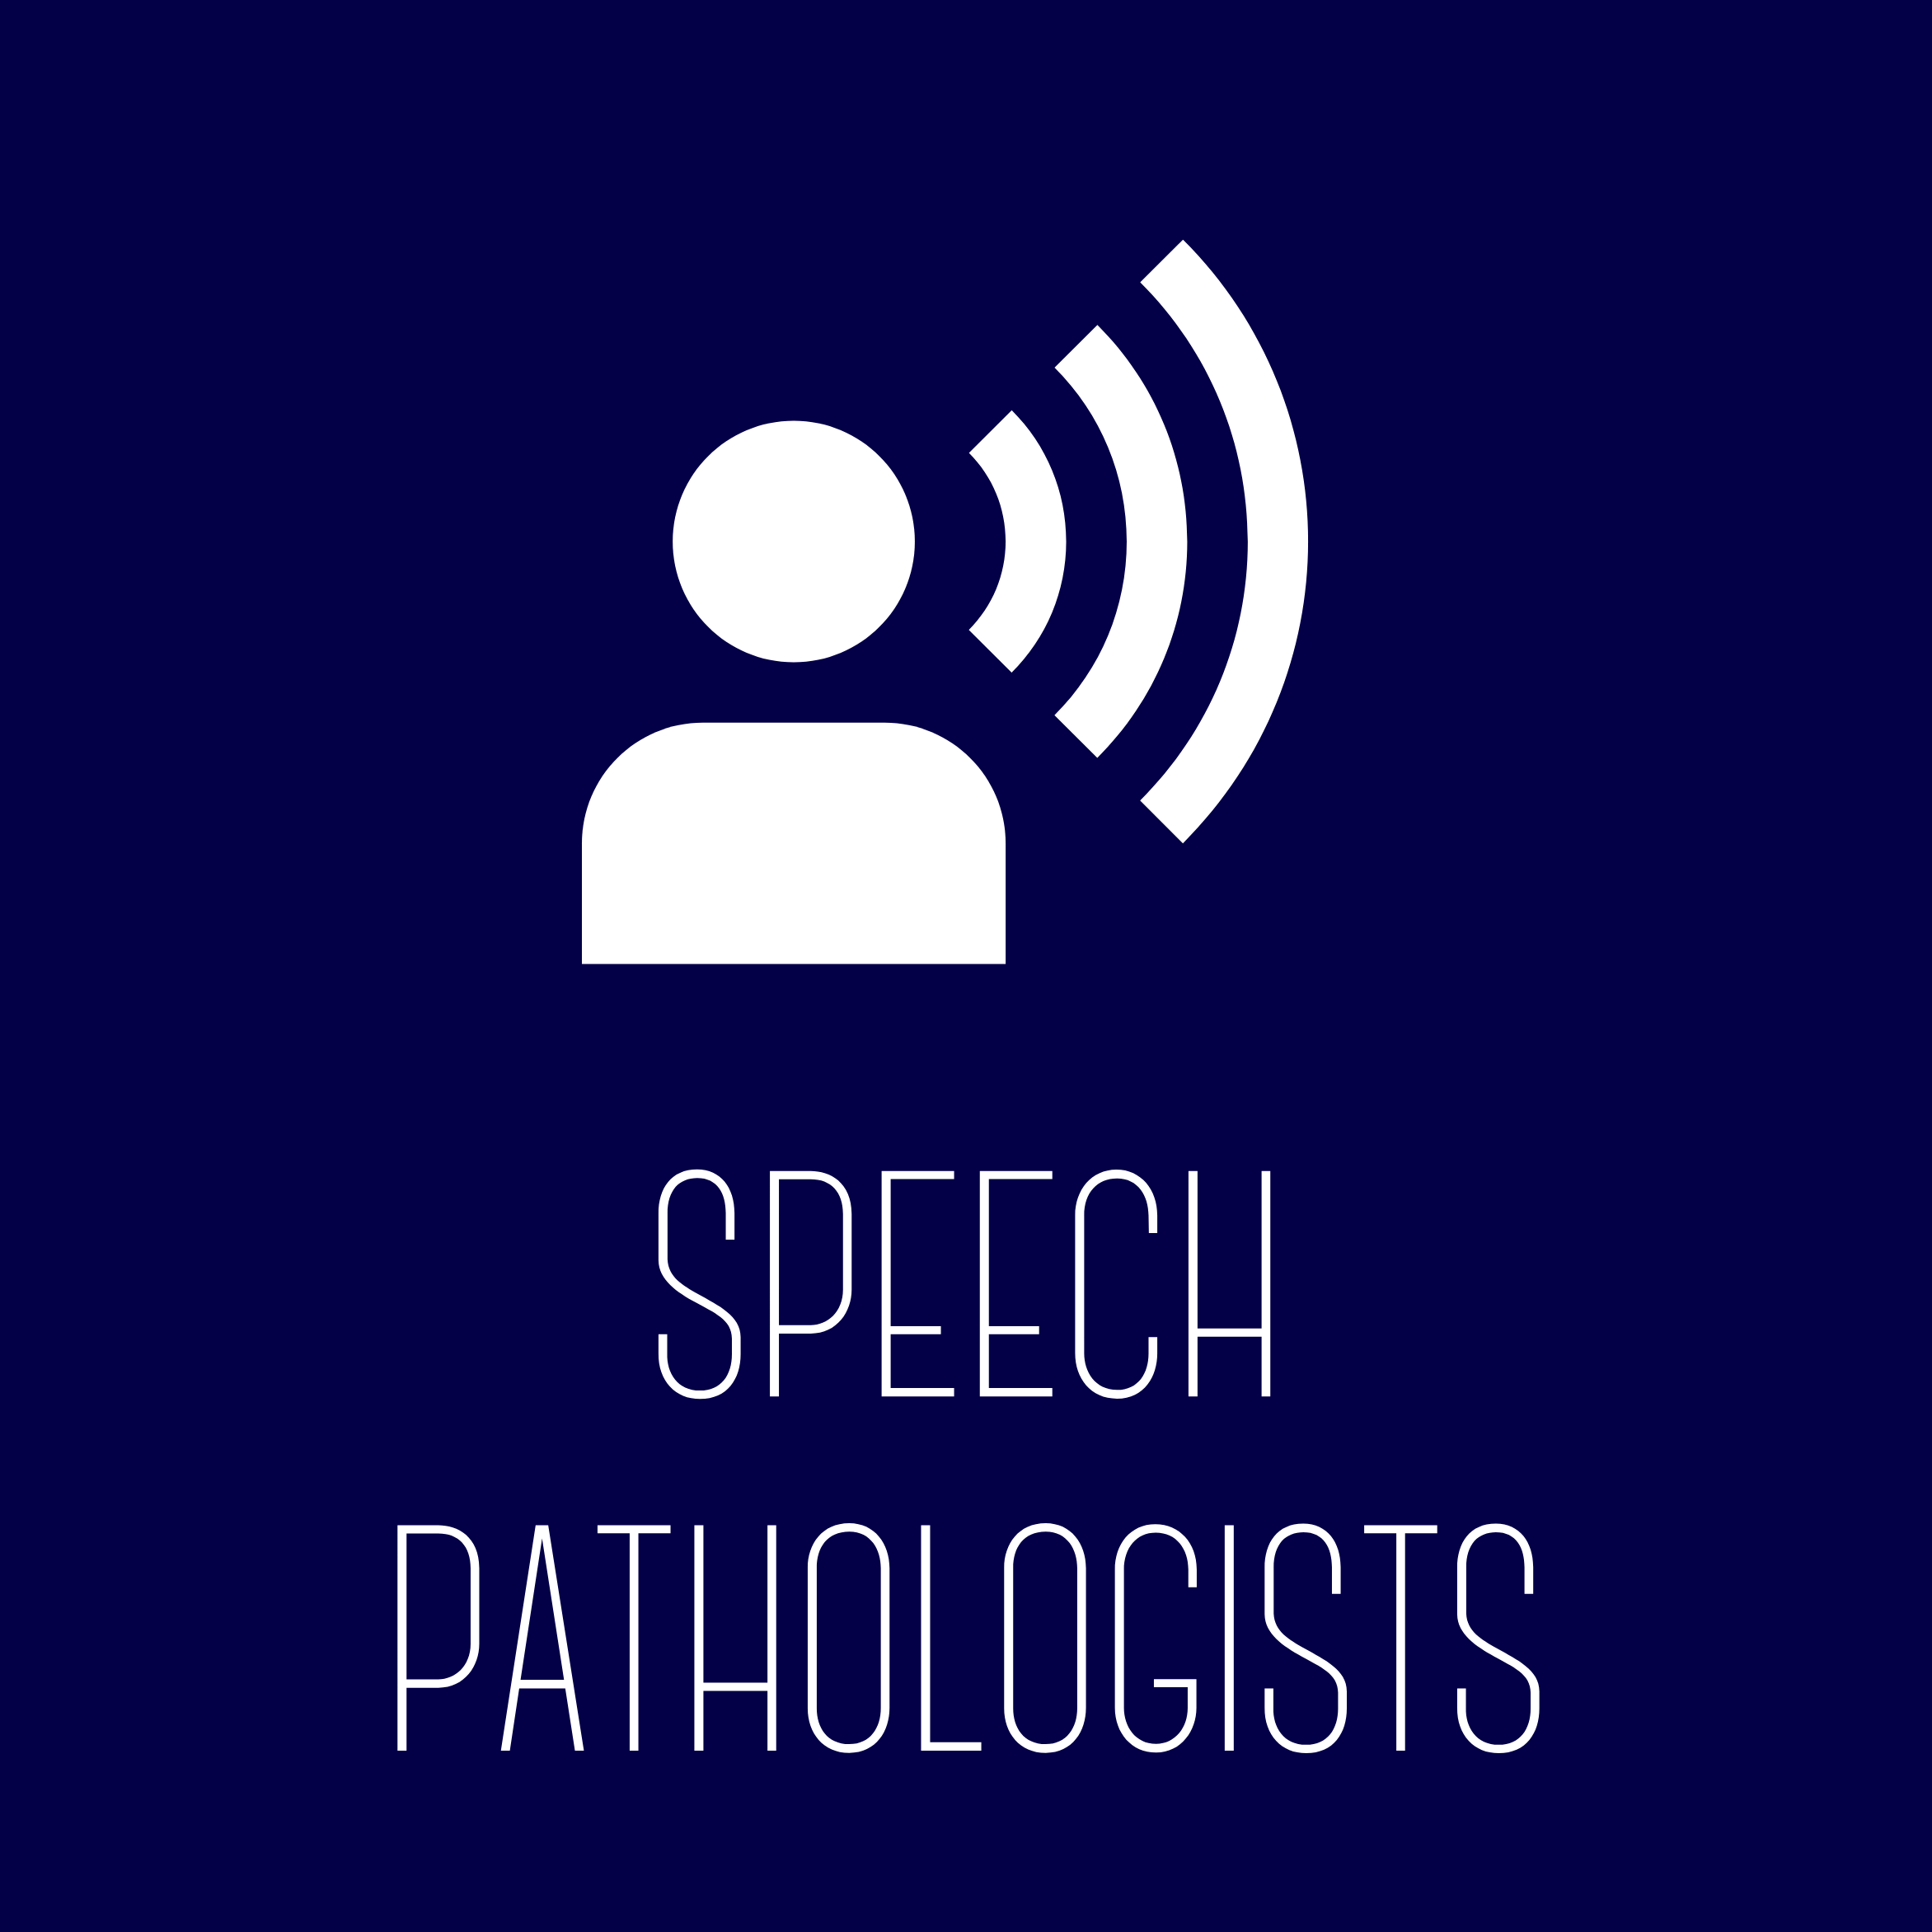 Speech Pathologists